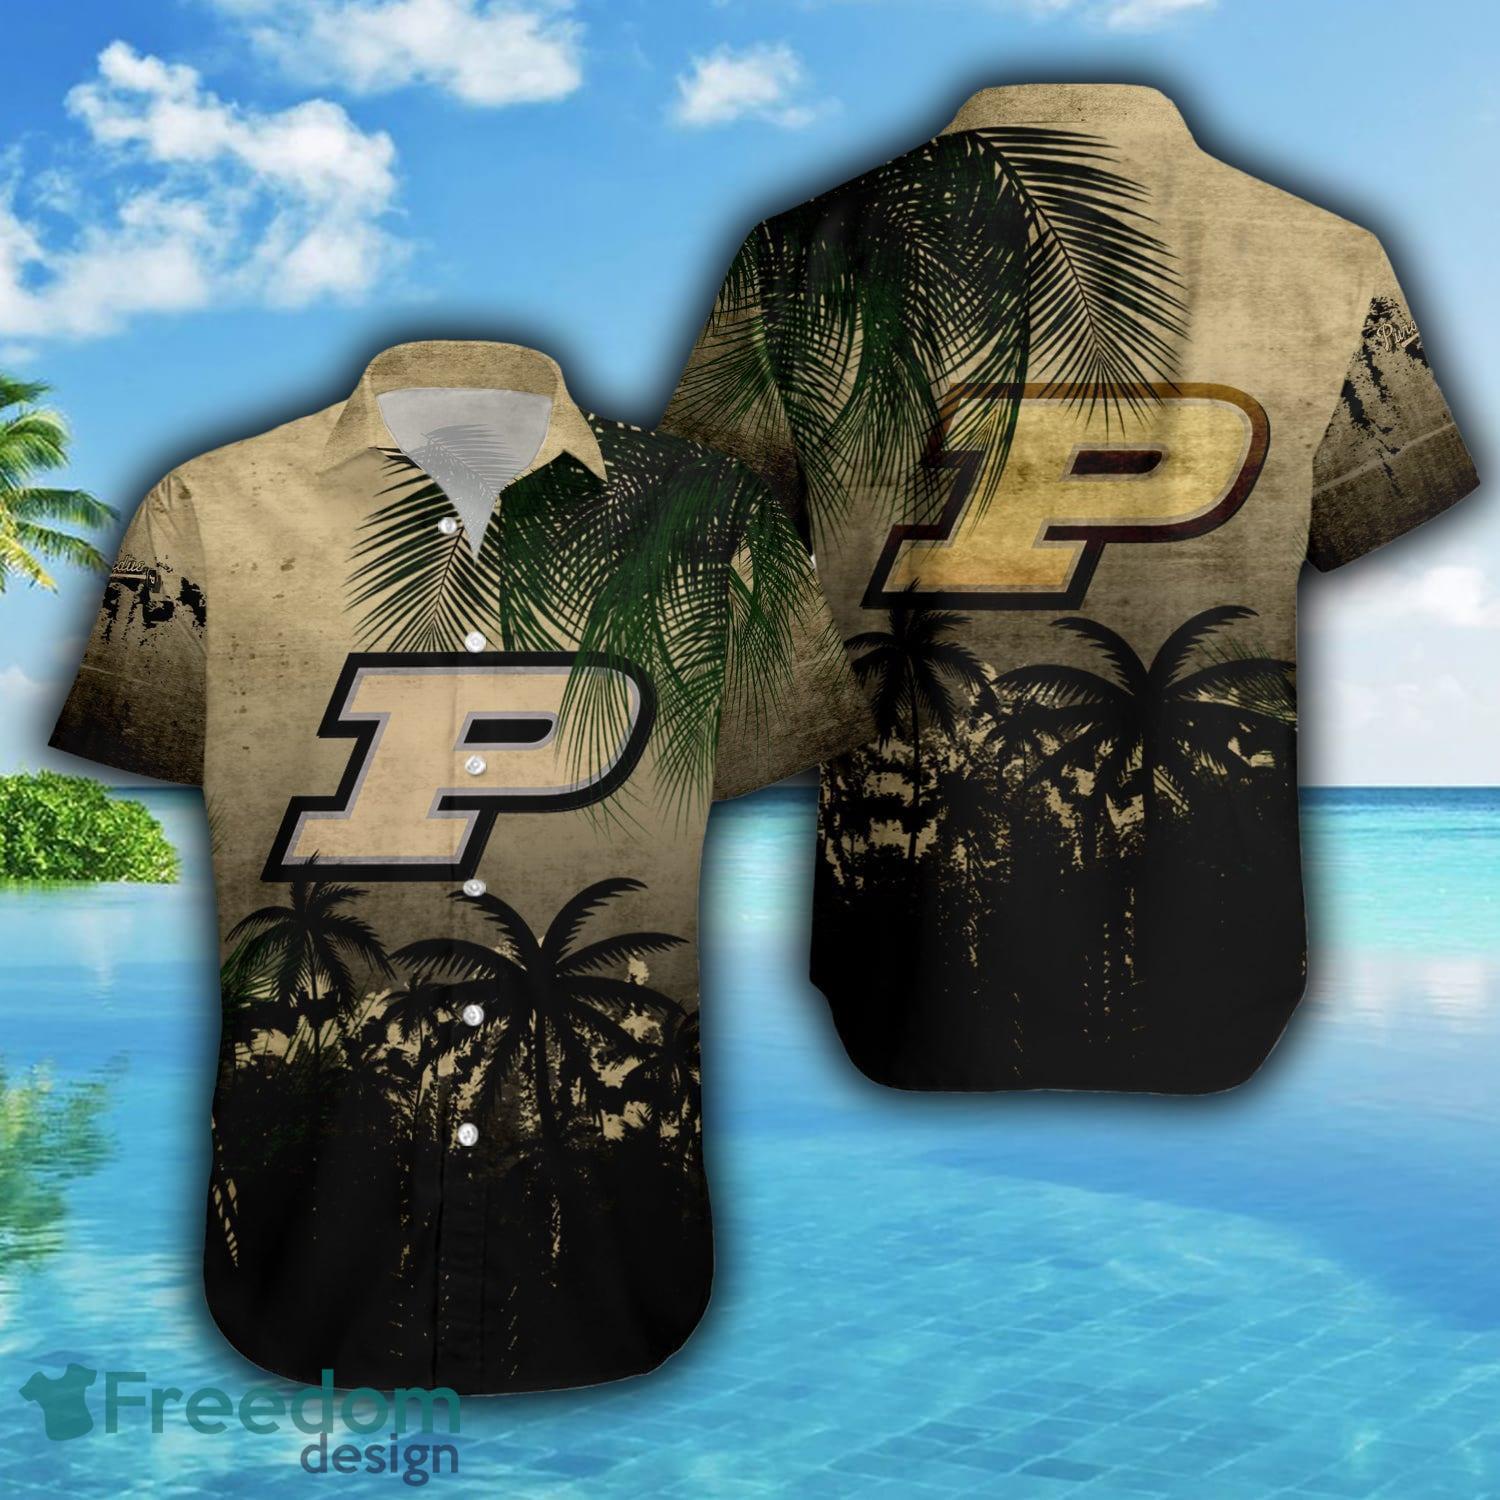 Pittsburgh Pirates And Kiss Short Sleeve Hawaiian Shirt And Short -  Freedomdesign